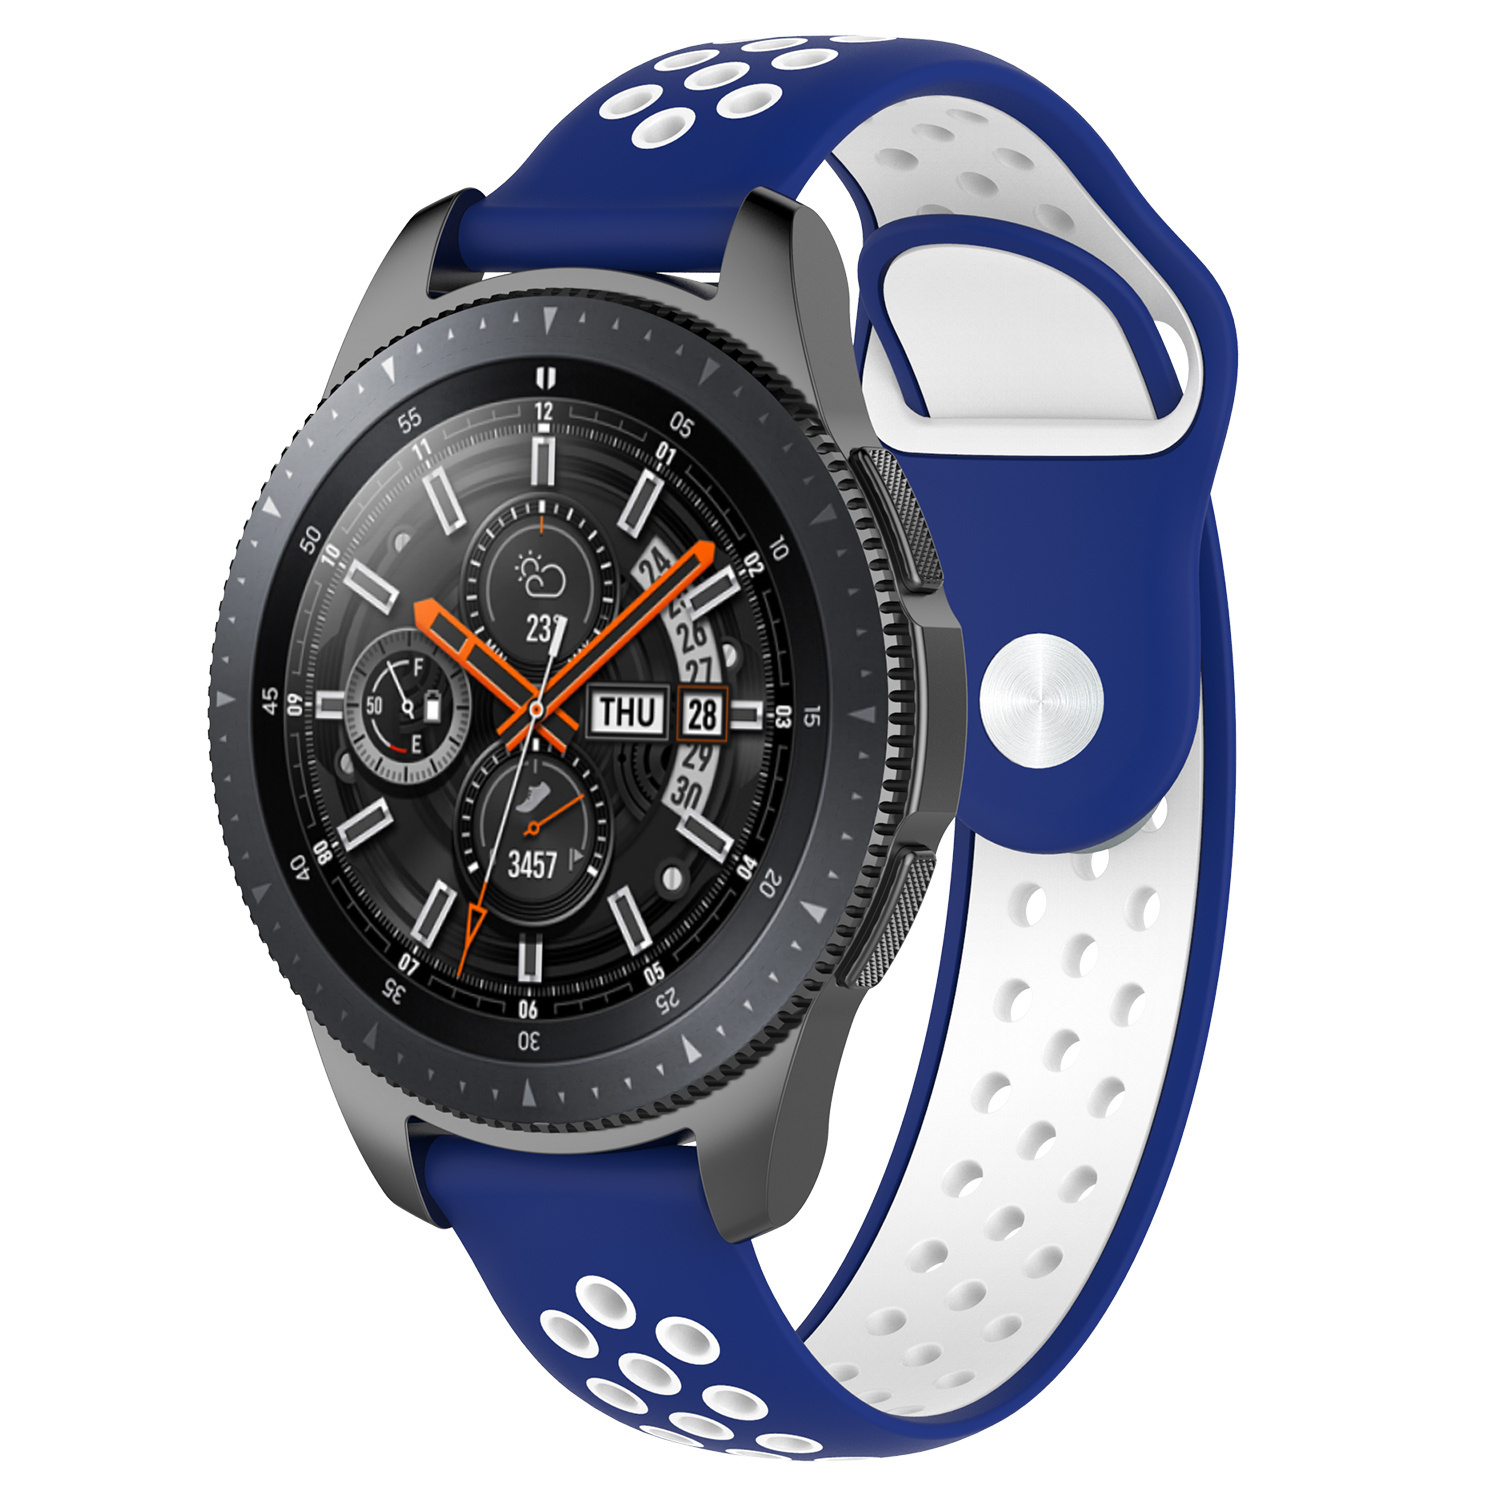 Cinturino doppio sport per Samsung Galaxy Watch - blu bianco